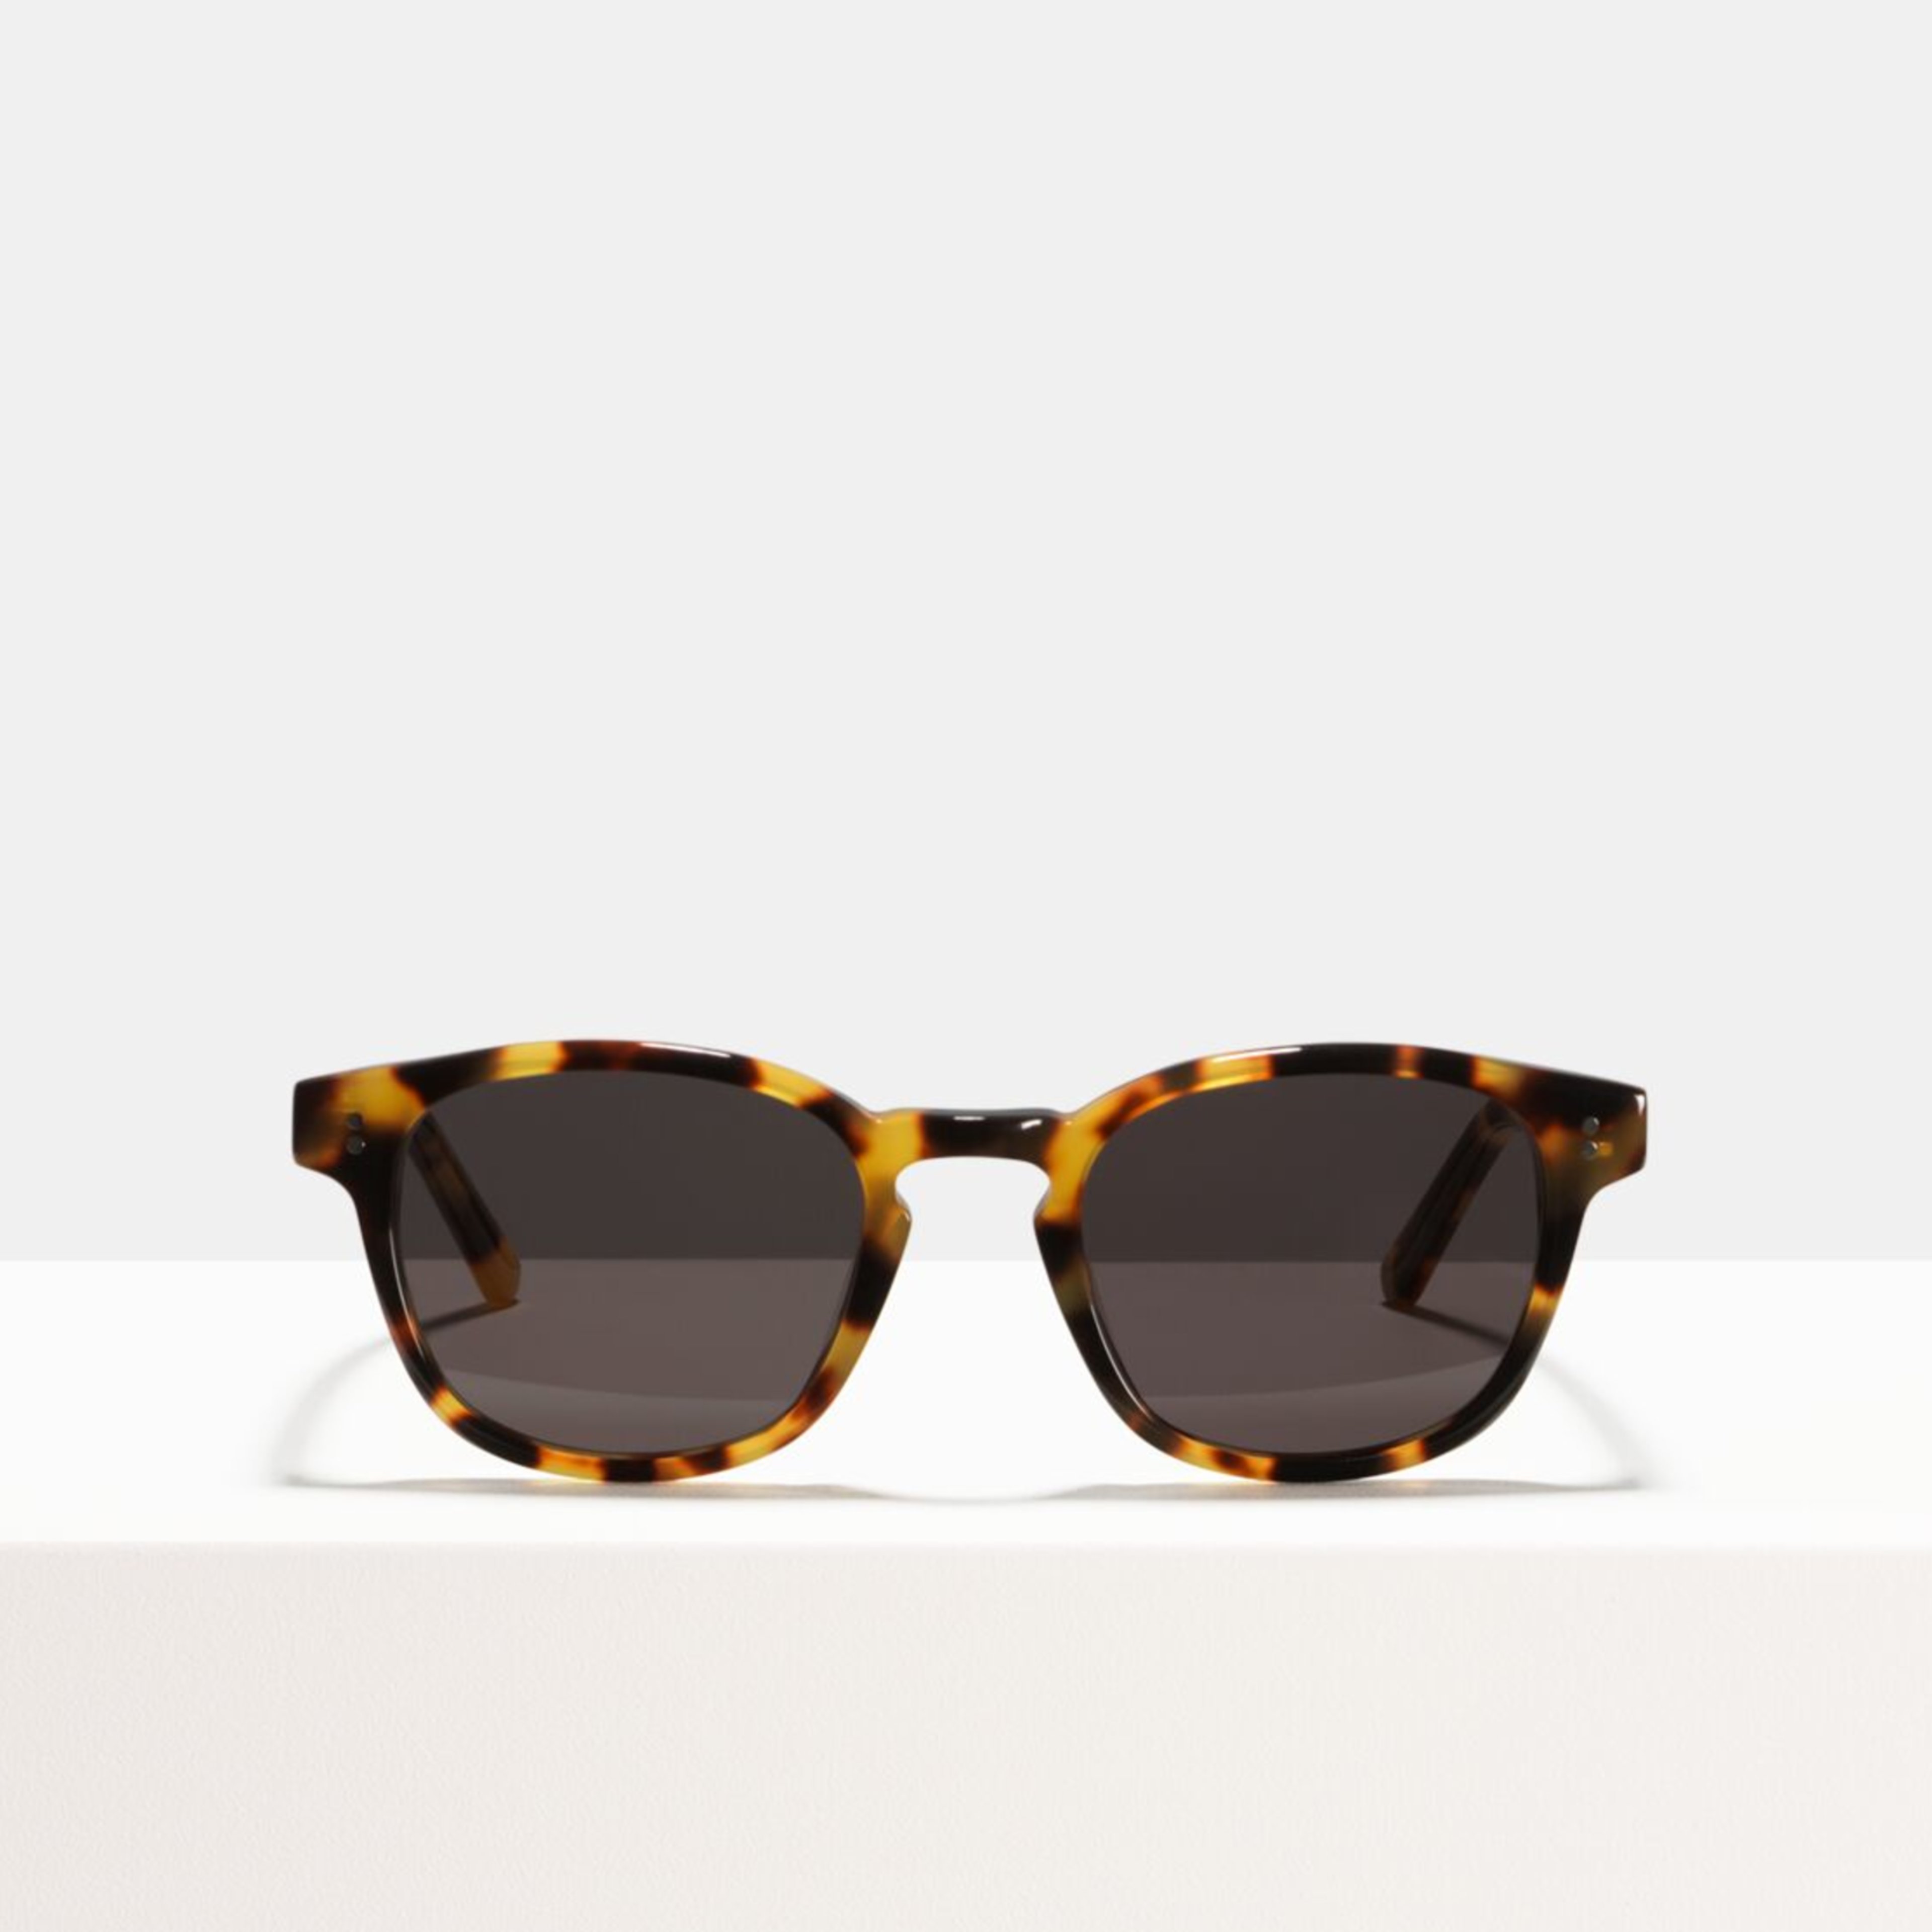 Ace & Tate Sunglasses | square bio acetate in Black, Yellow